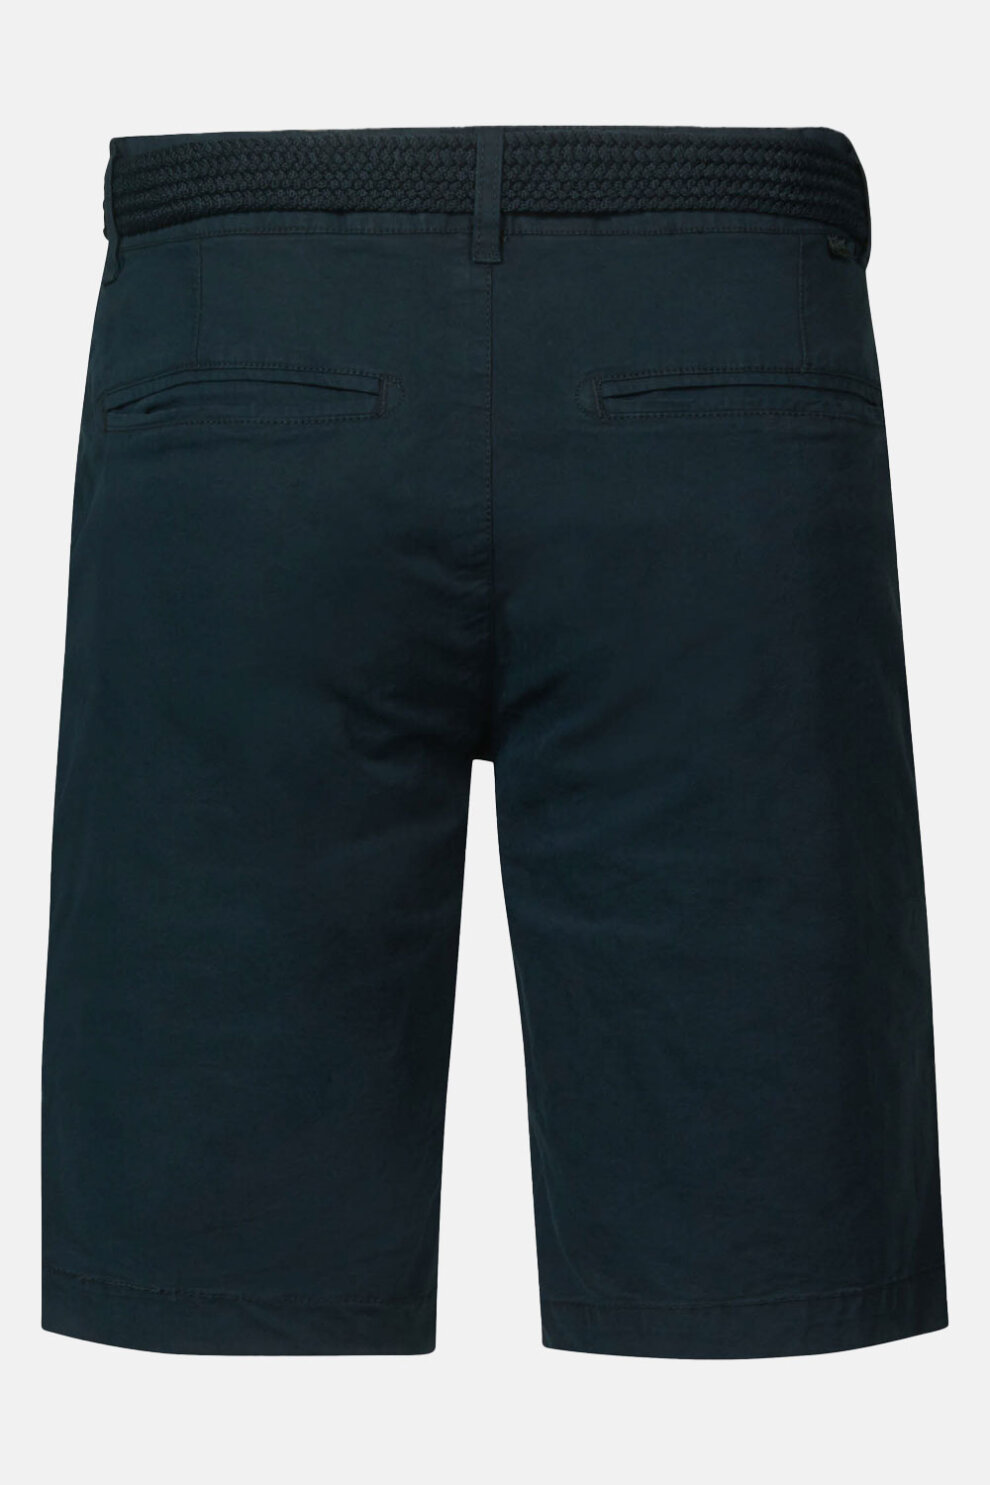 MUŠKARCI - Kratke hlače - Petrol chino bermude - Plava